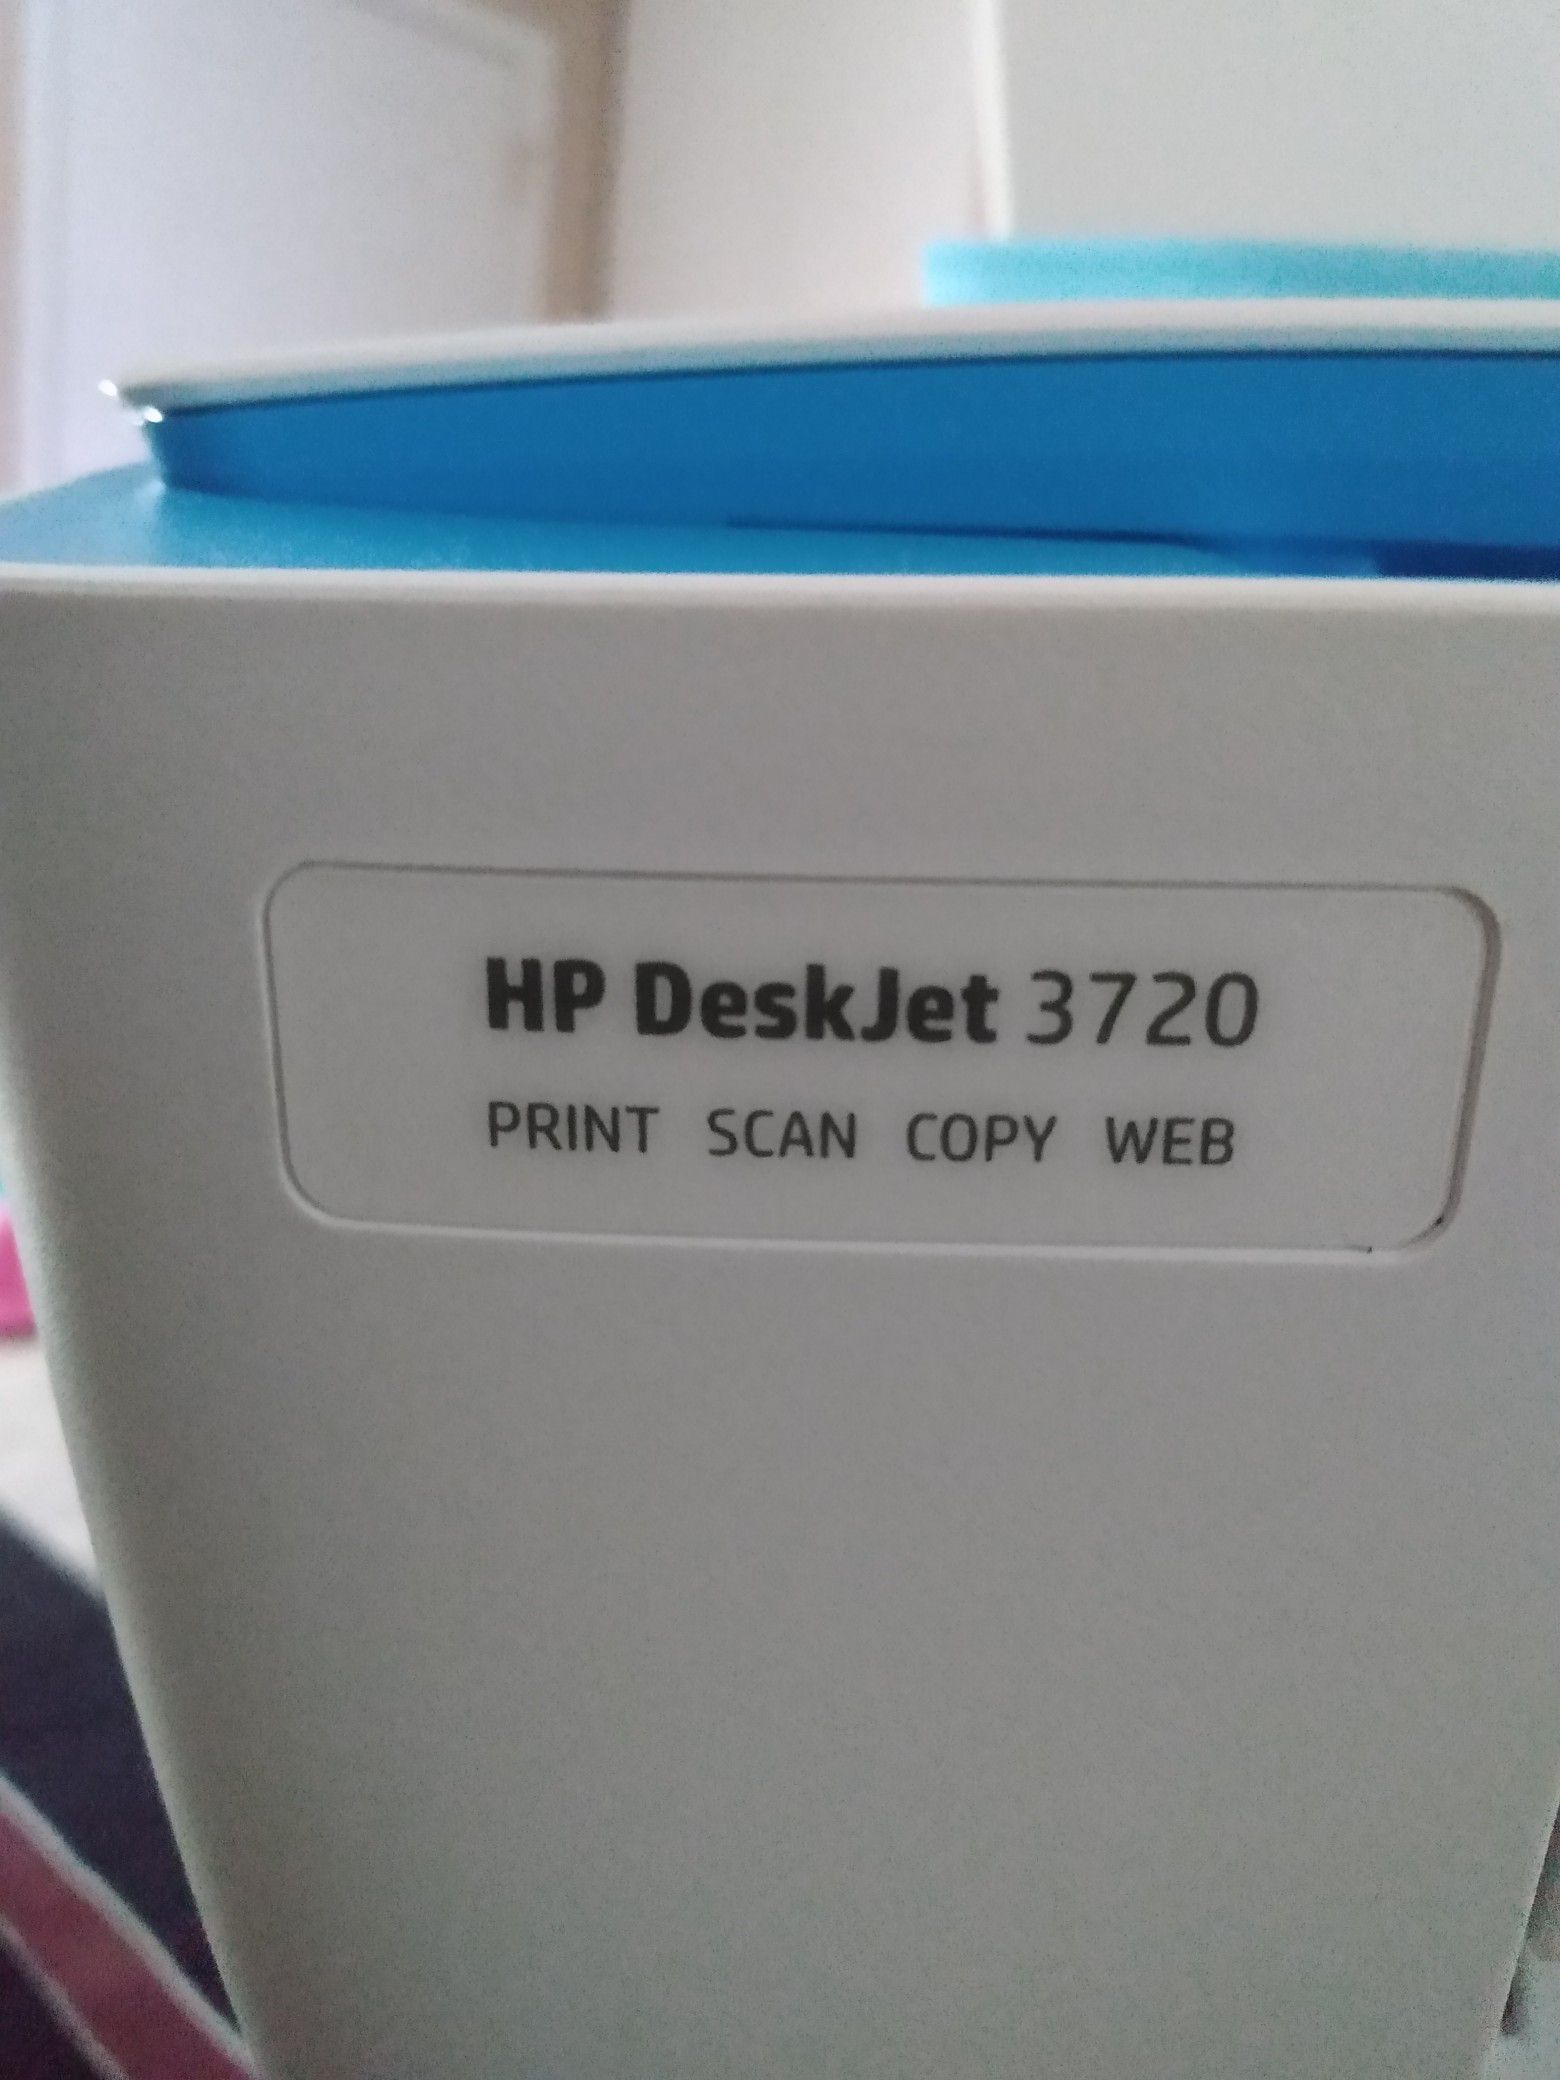 2 HP wireless printers